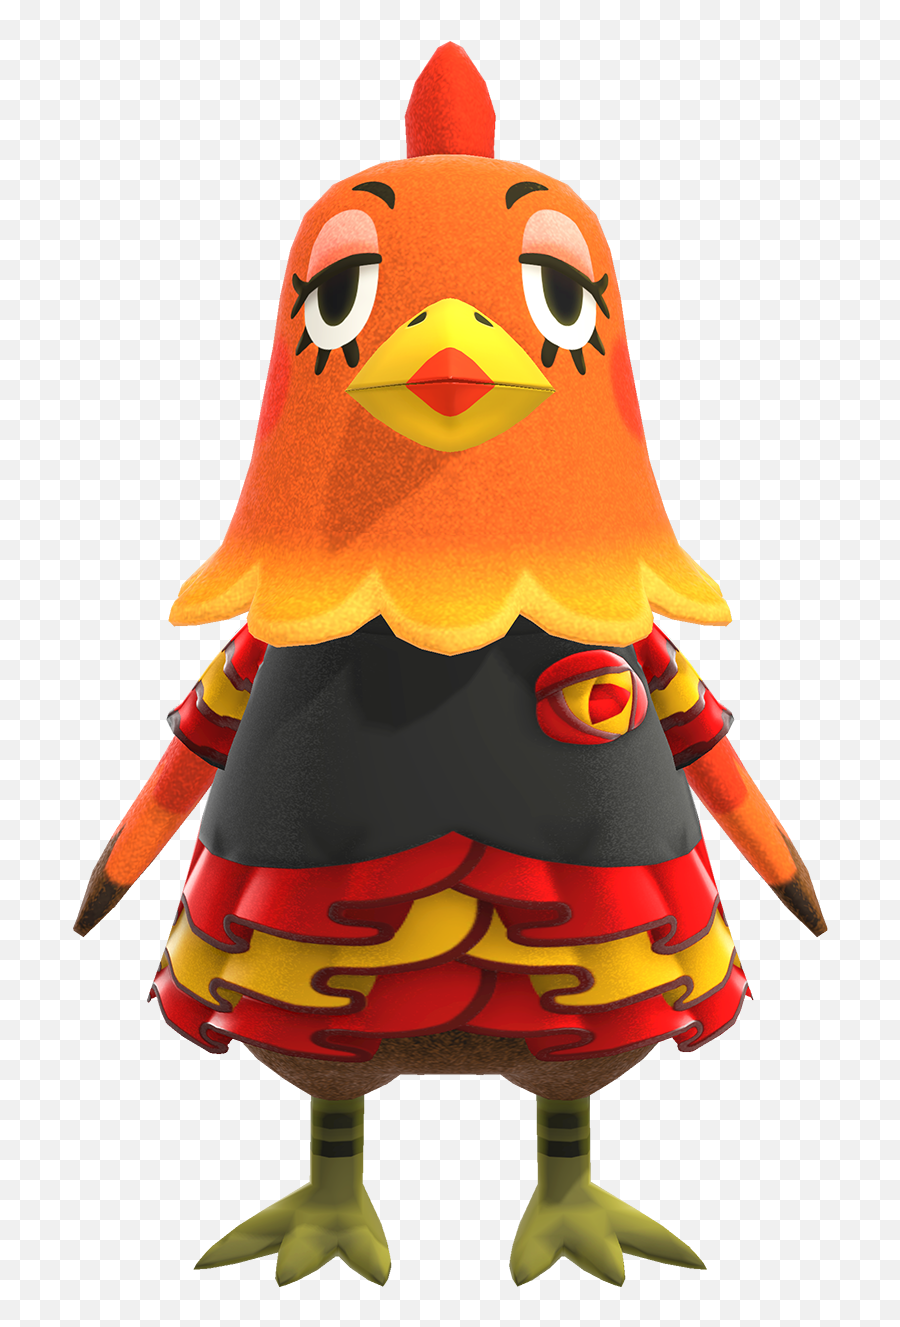 Broffina - Broffina Animal Crossing Emoji,Emotion In Chickens